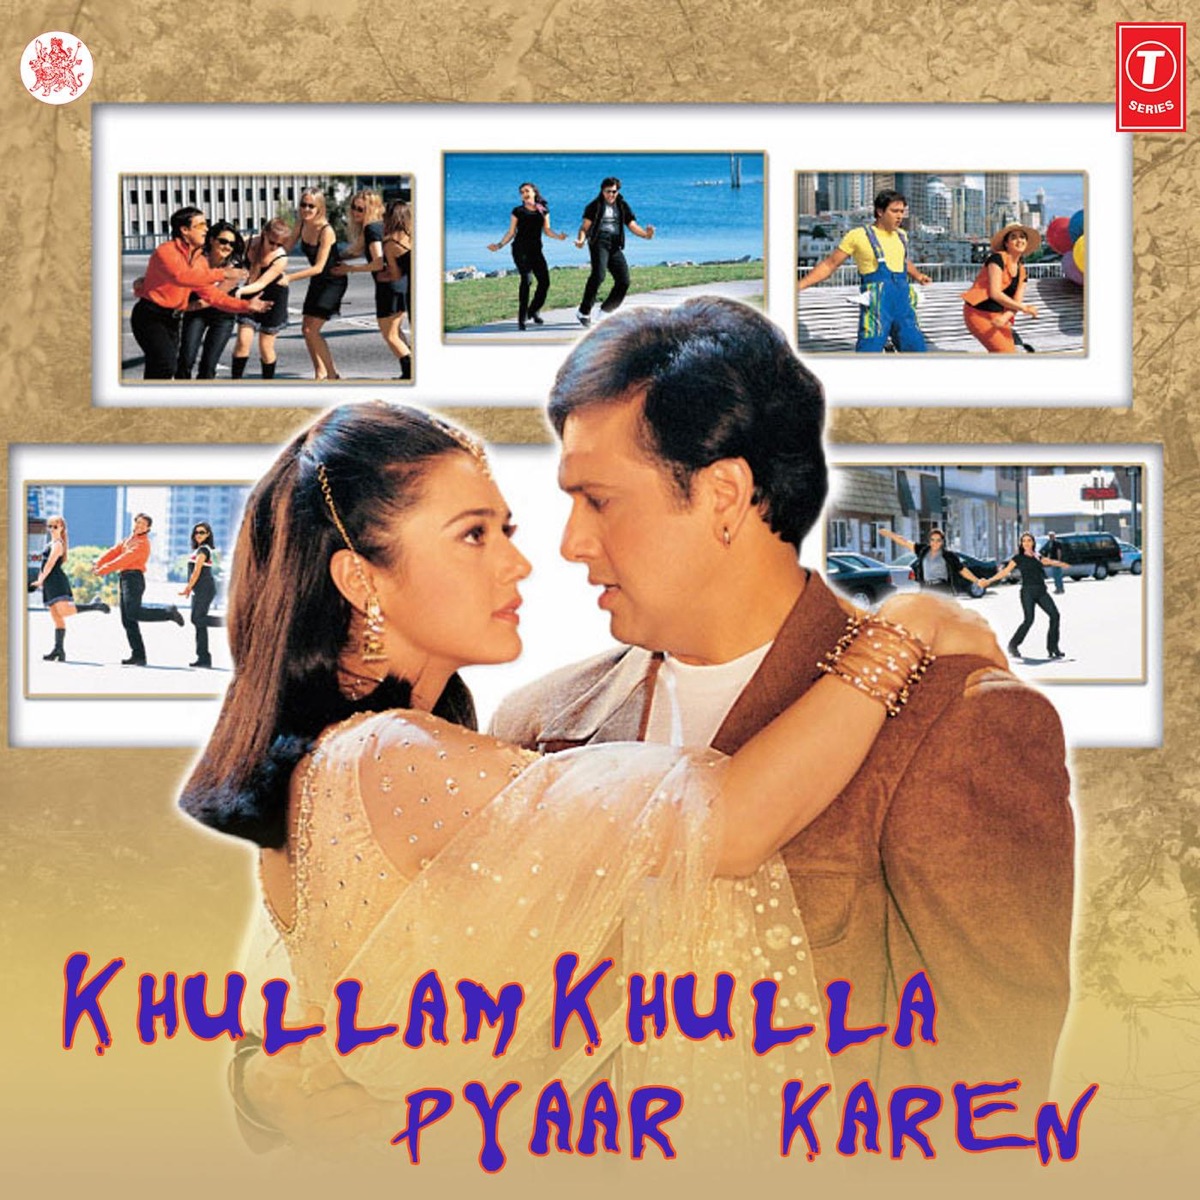 Khullam Khullah Pyaar Karen (Original Motion Picture Soundtrack) by  Anand-Milind on Apple Music